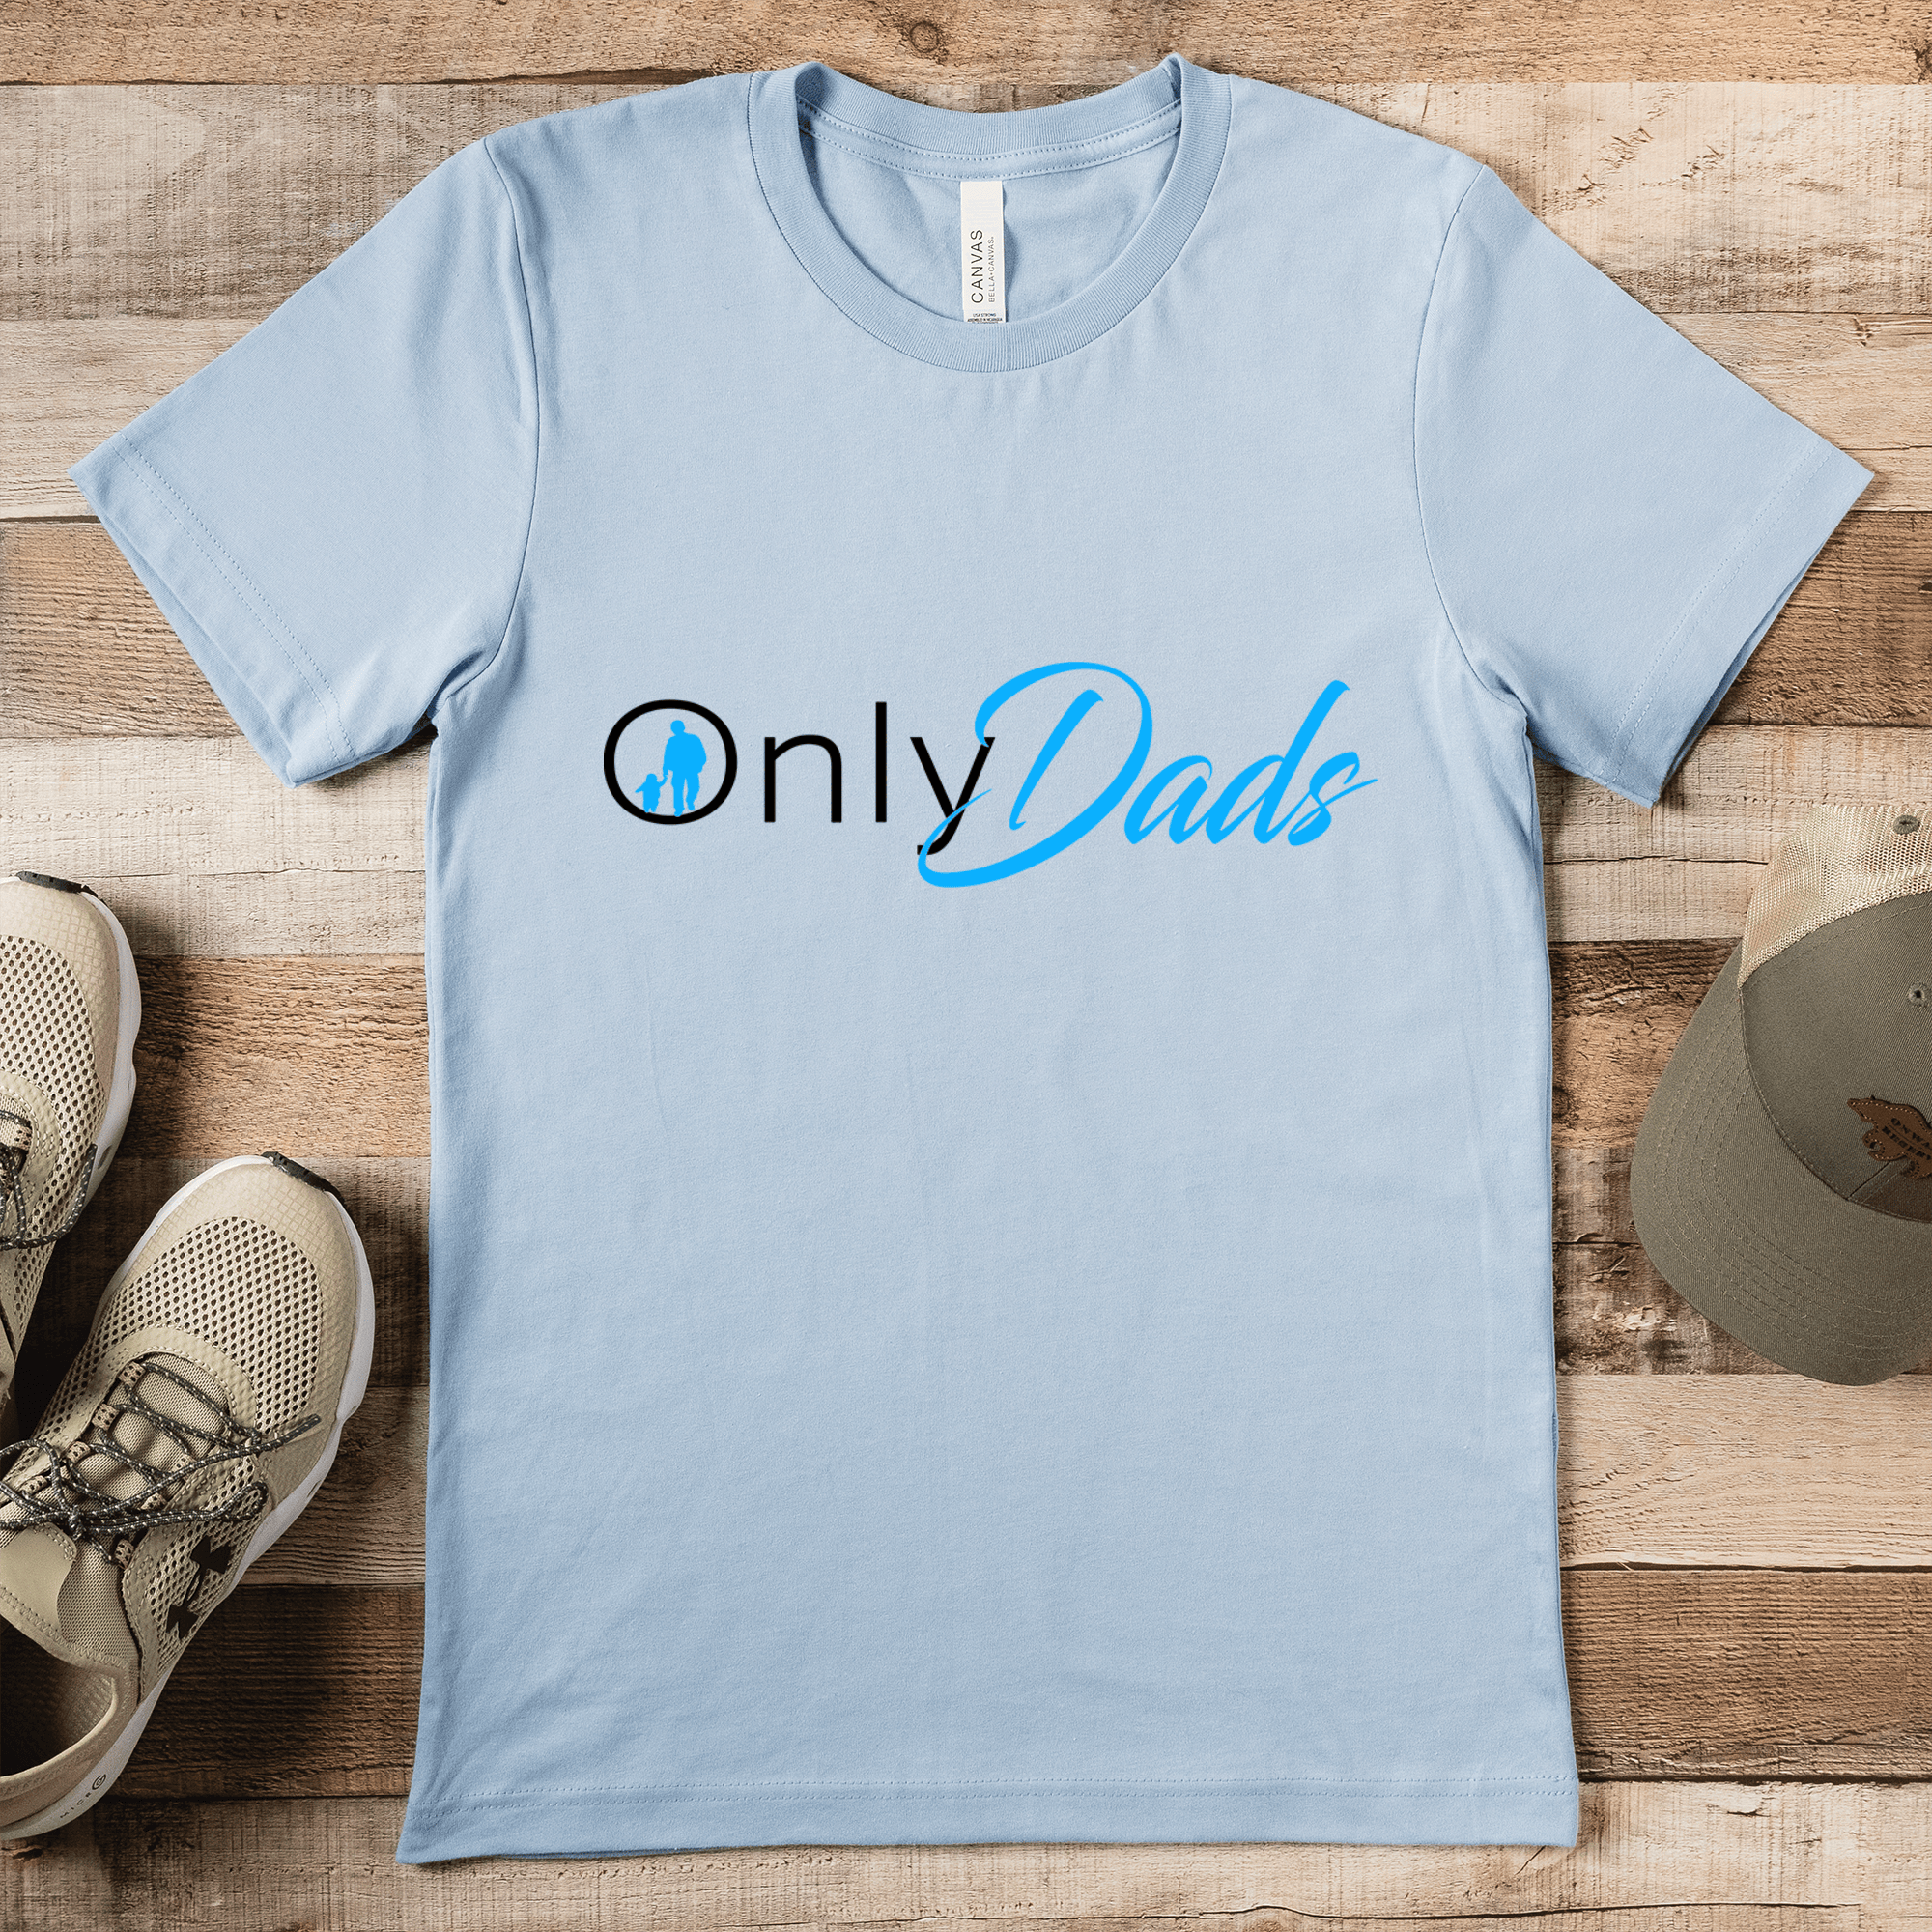 Funny Dad T-Shirts & T-Shirt Designs